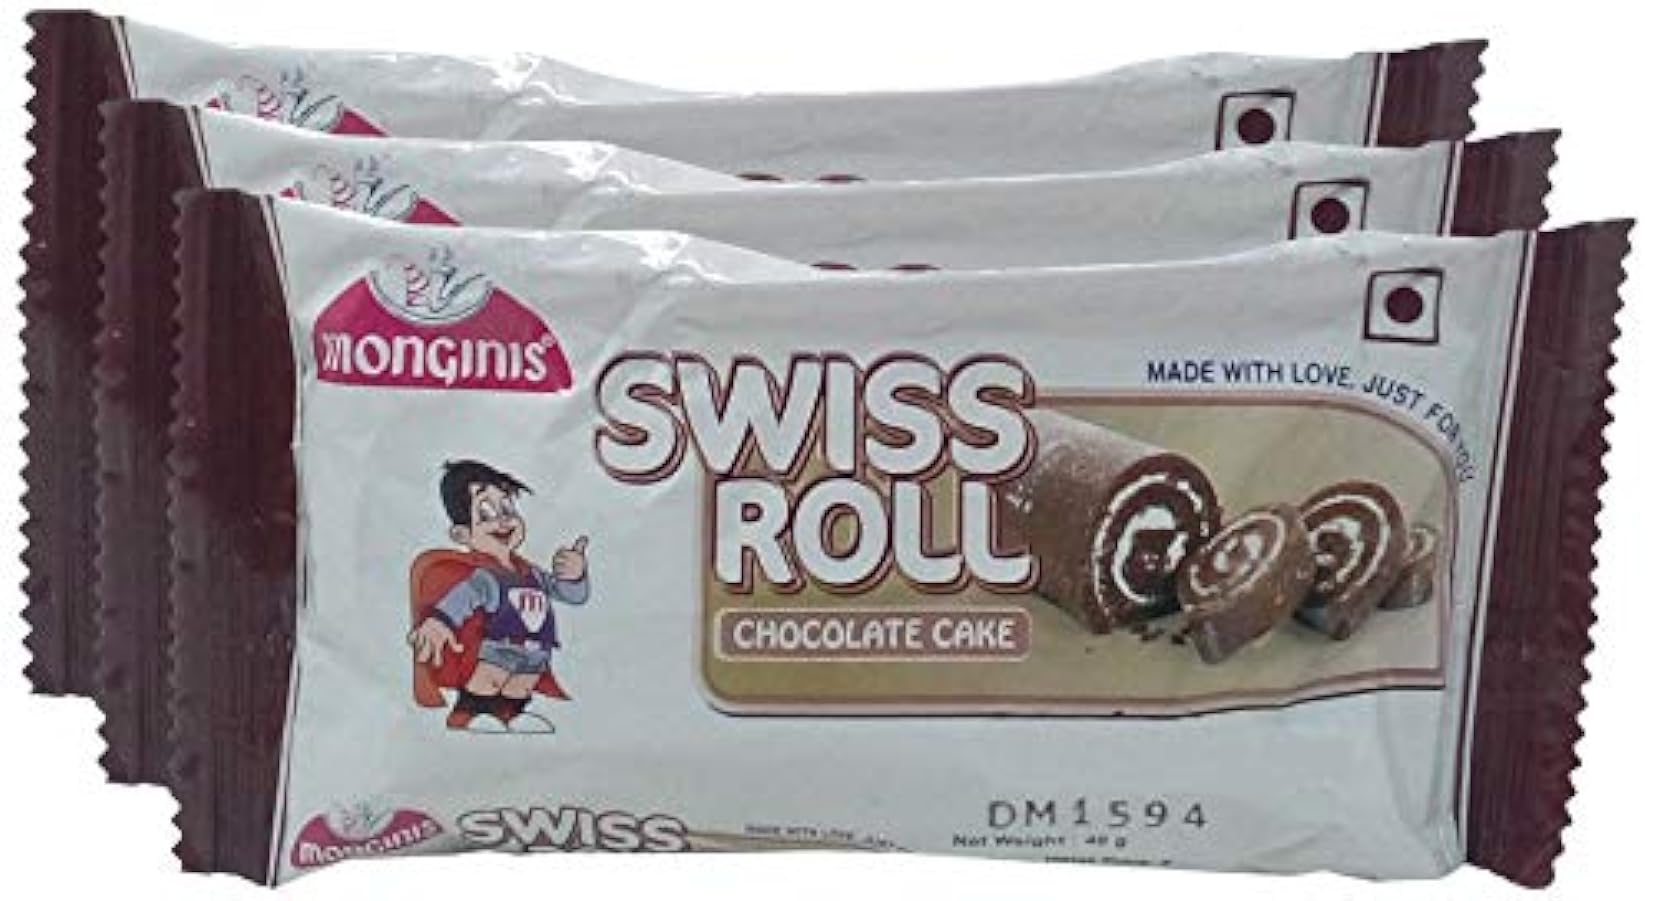 Monginis Swiss Roll Cake - Cioccolato, 40g (Acquista 2 Get 1, 3 pezzi) Promo Pack 648465388